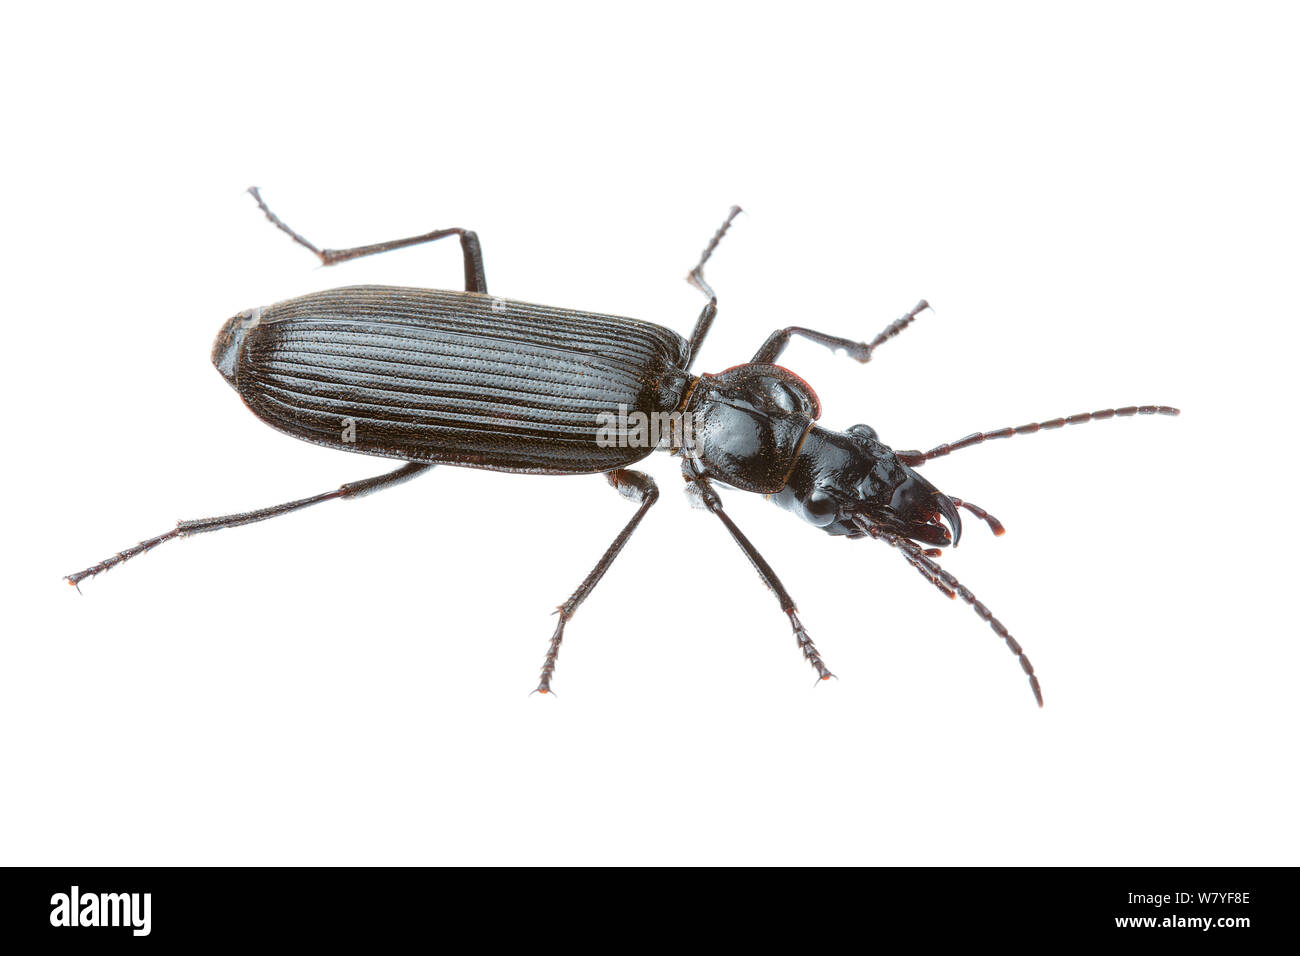 Black ground beetle (Helluonidius sp), Meekatharra Shire, Gascoyne Bioregion, Western Australia. meetyourneighbours.net project Stock Photo